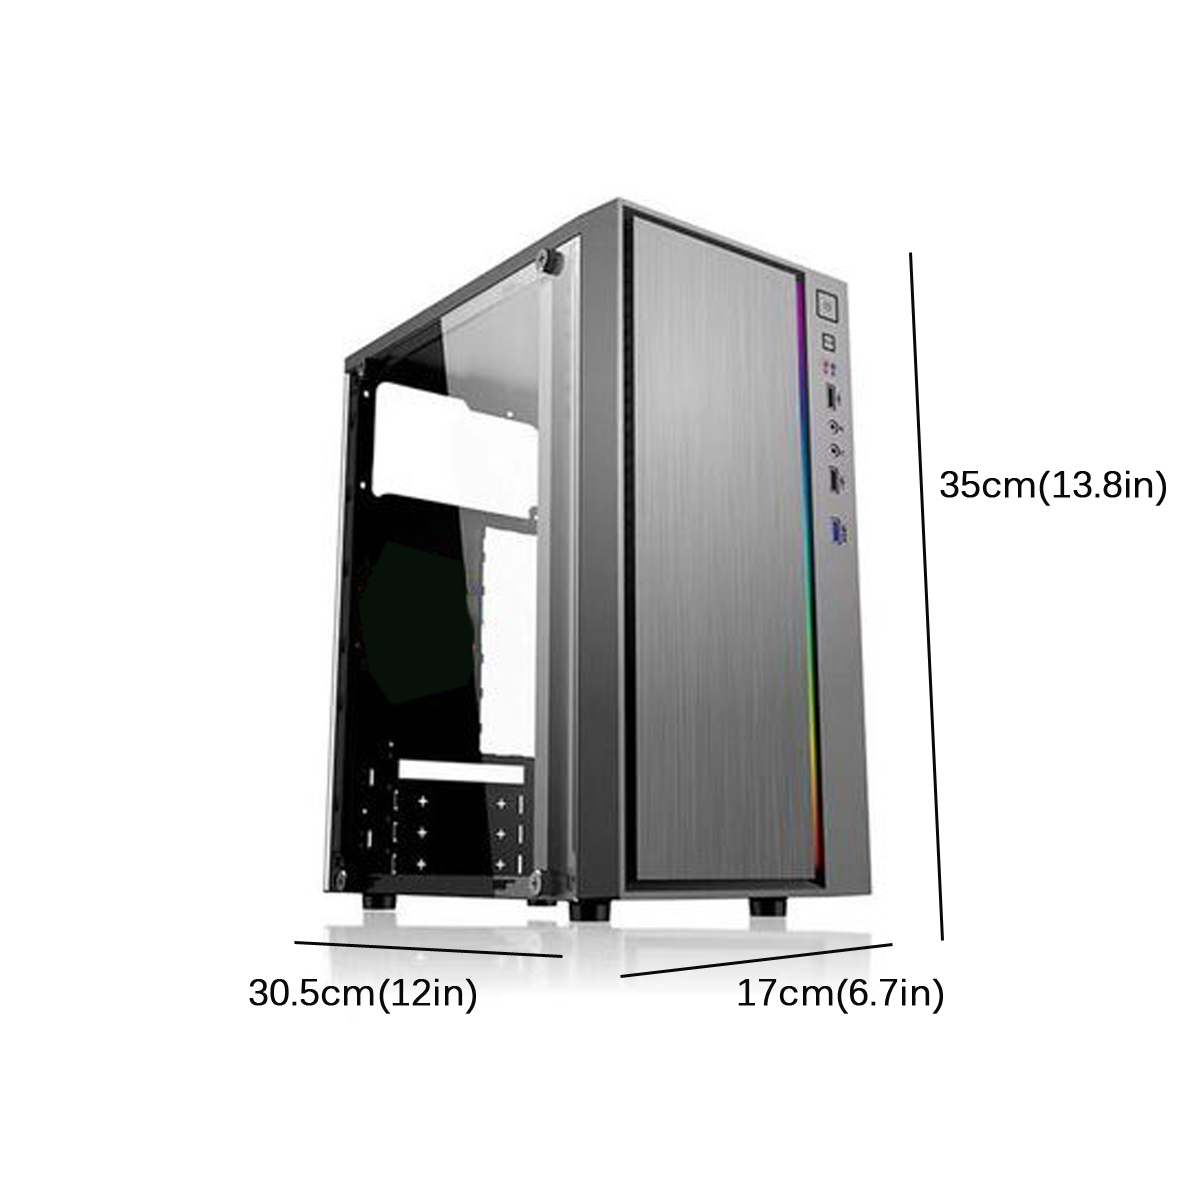 M-ATX--Mini-ITX-Computer-Gaming-PC-Case-RGB-Cooling-Fan-USB-Audio-Interface-with-Light-Bar-1627169-3